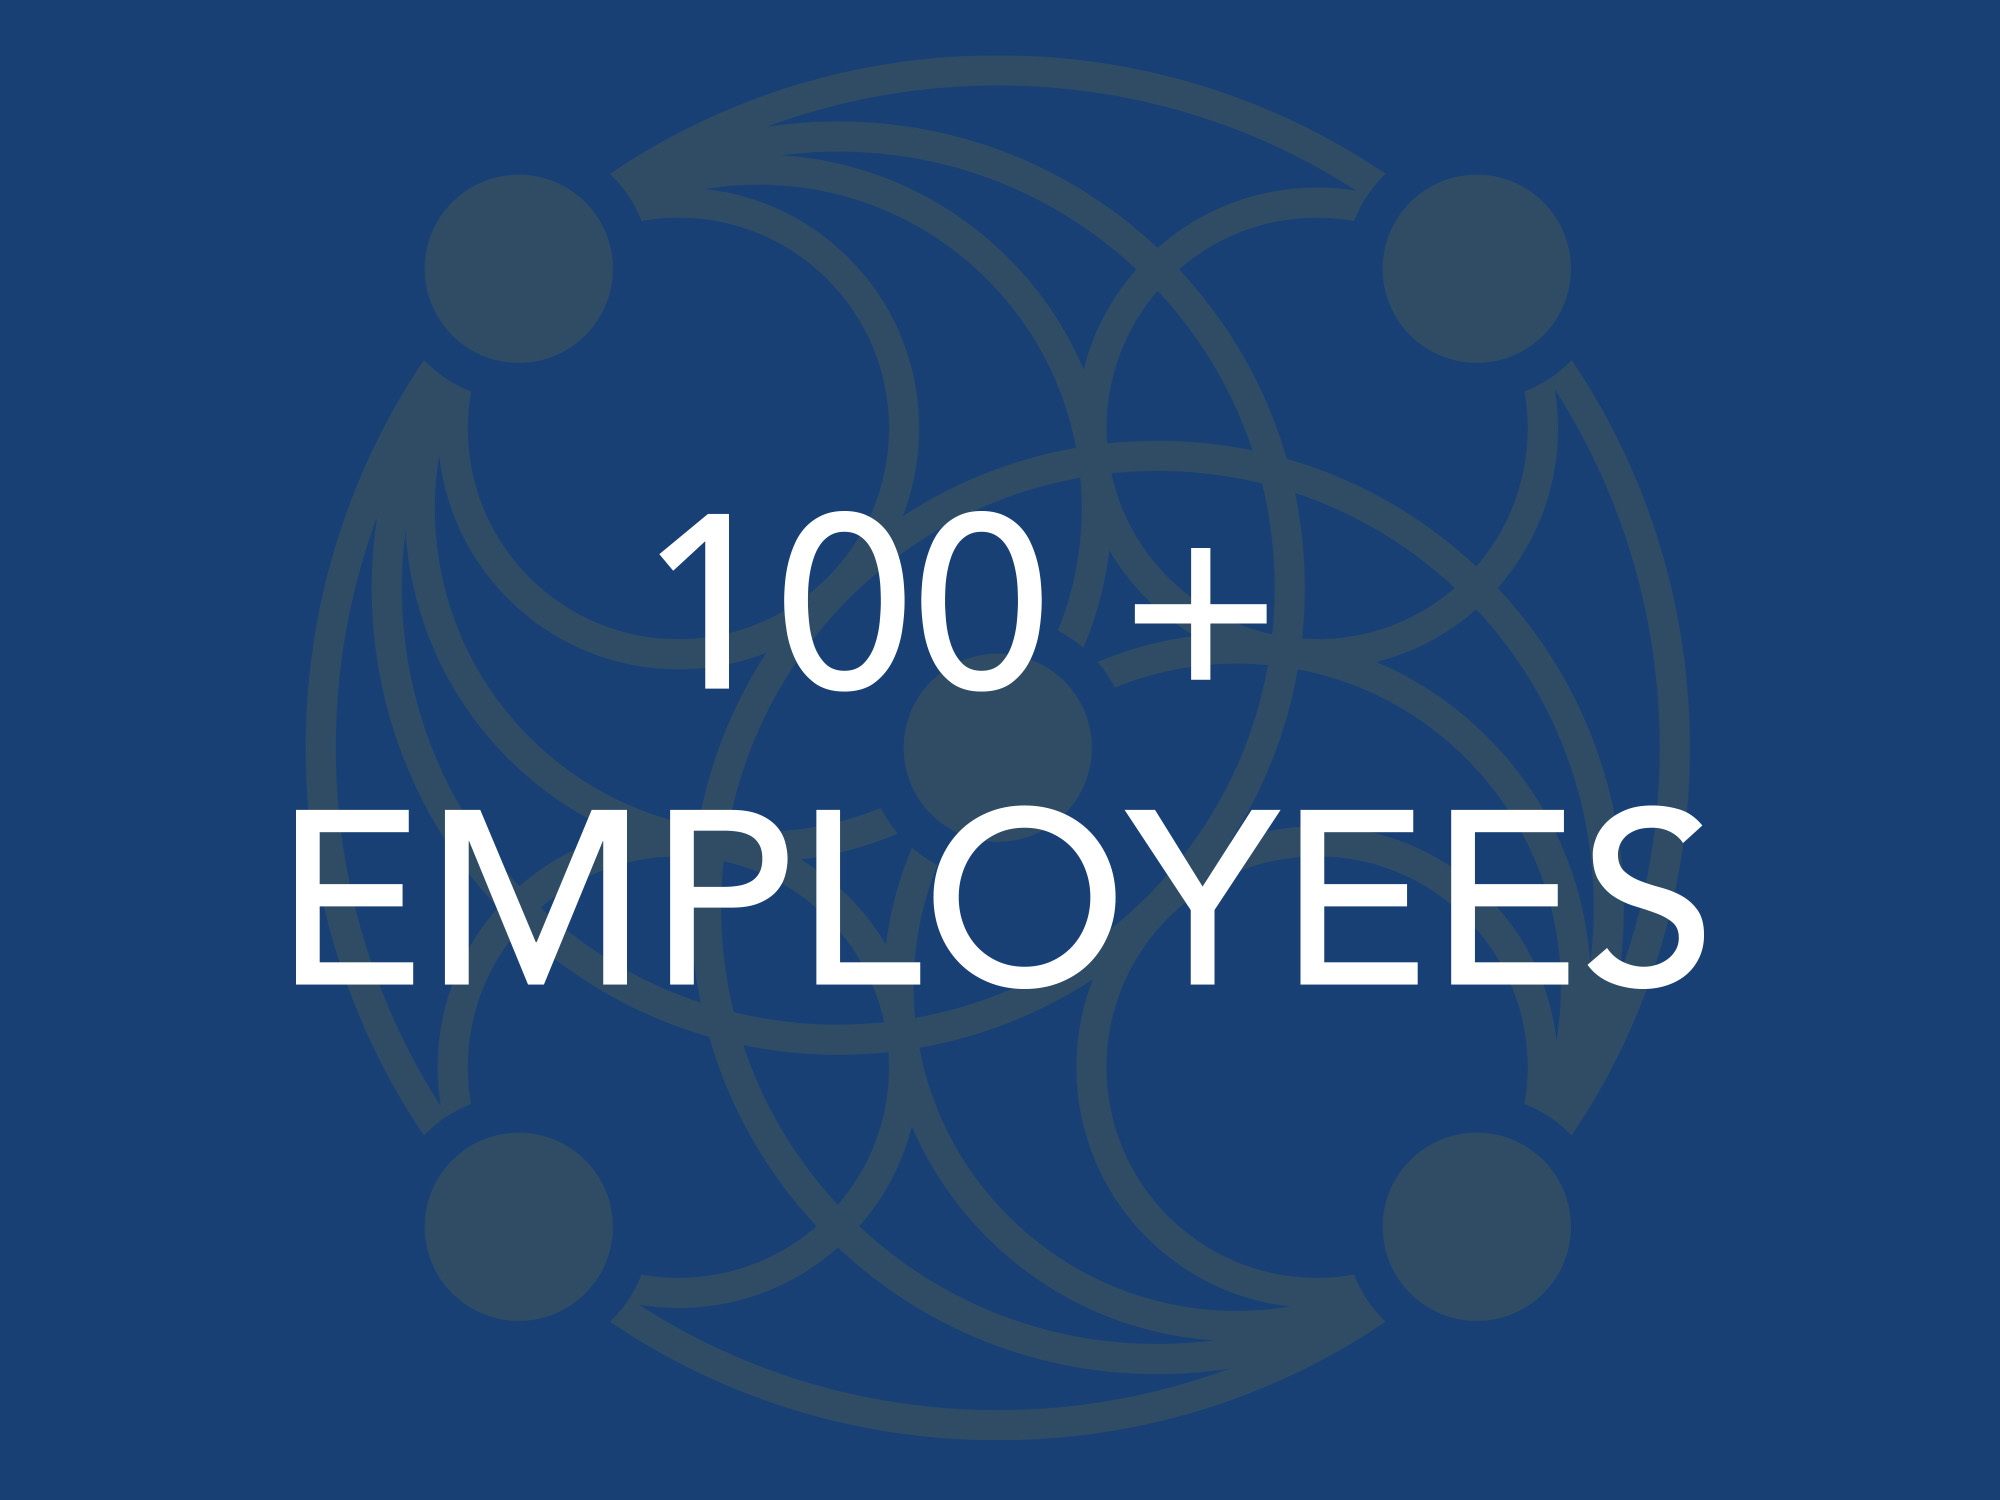 100+ Employees